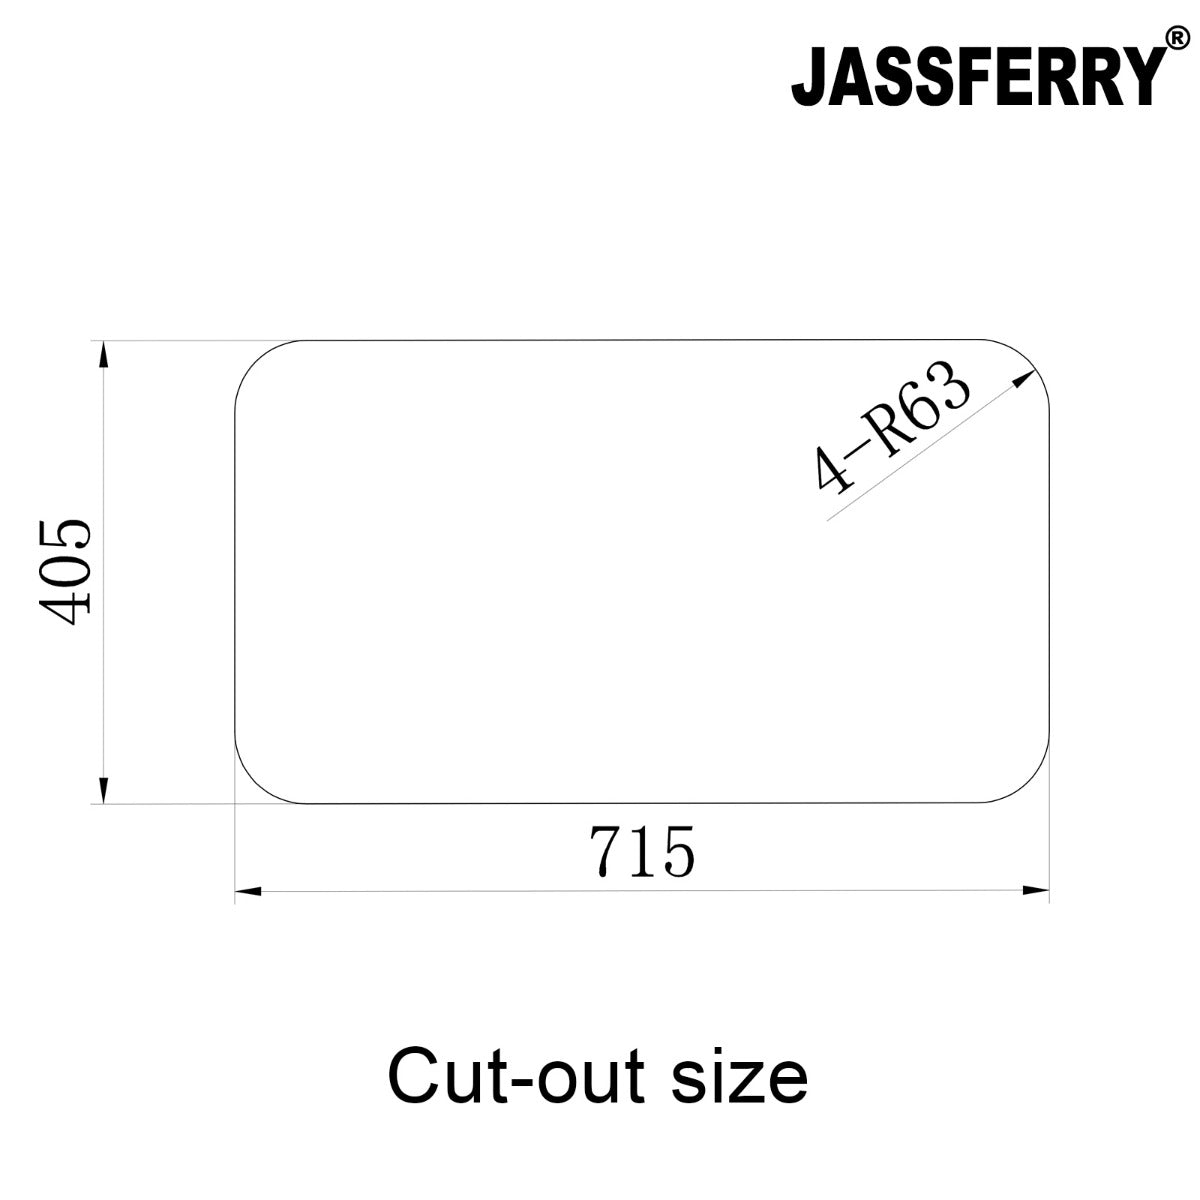 JassferryJASSFERRY Undermount Stainless Steel Kitchen Sink Double Square Bowl - 985Kitchen Sinks